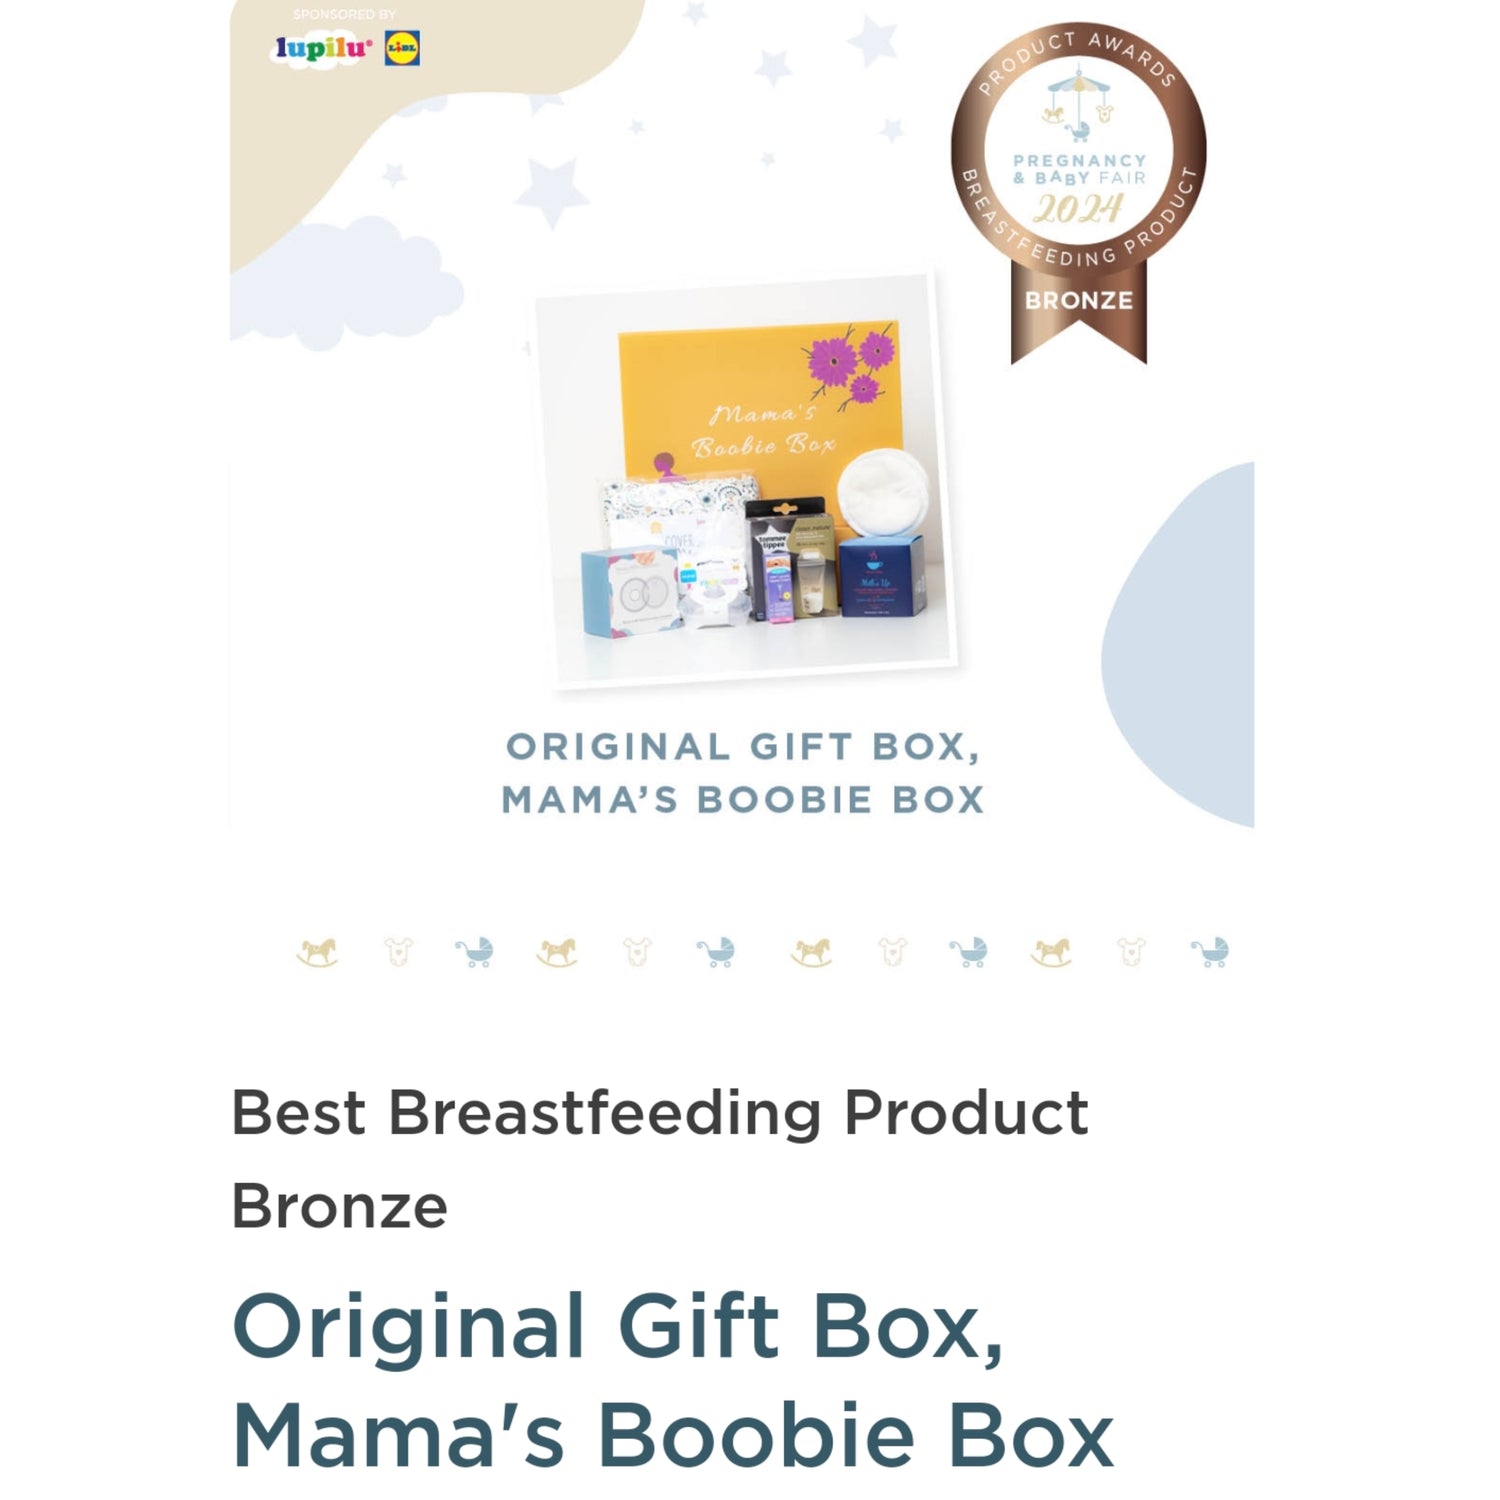 Bronze Award for Original Gift Box